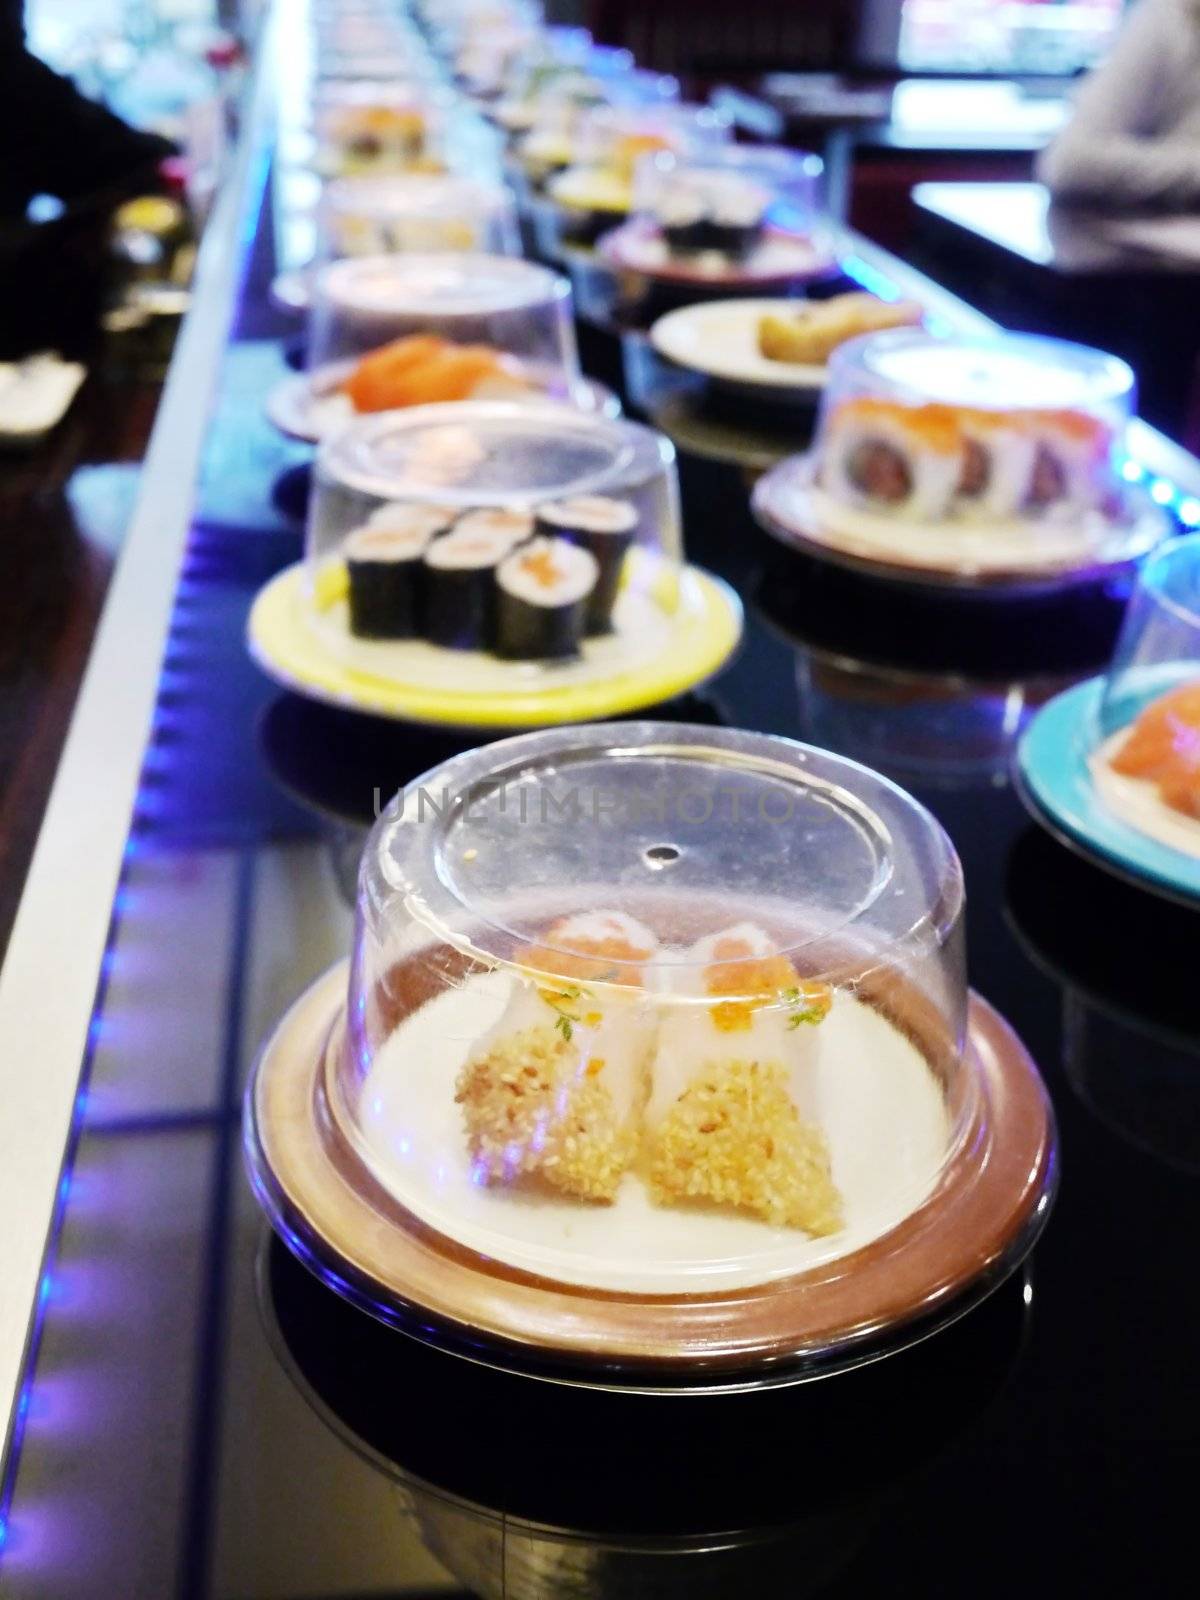 conveyor belt sushi by yucas